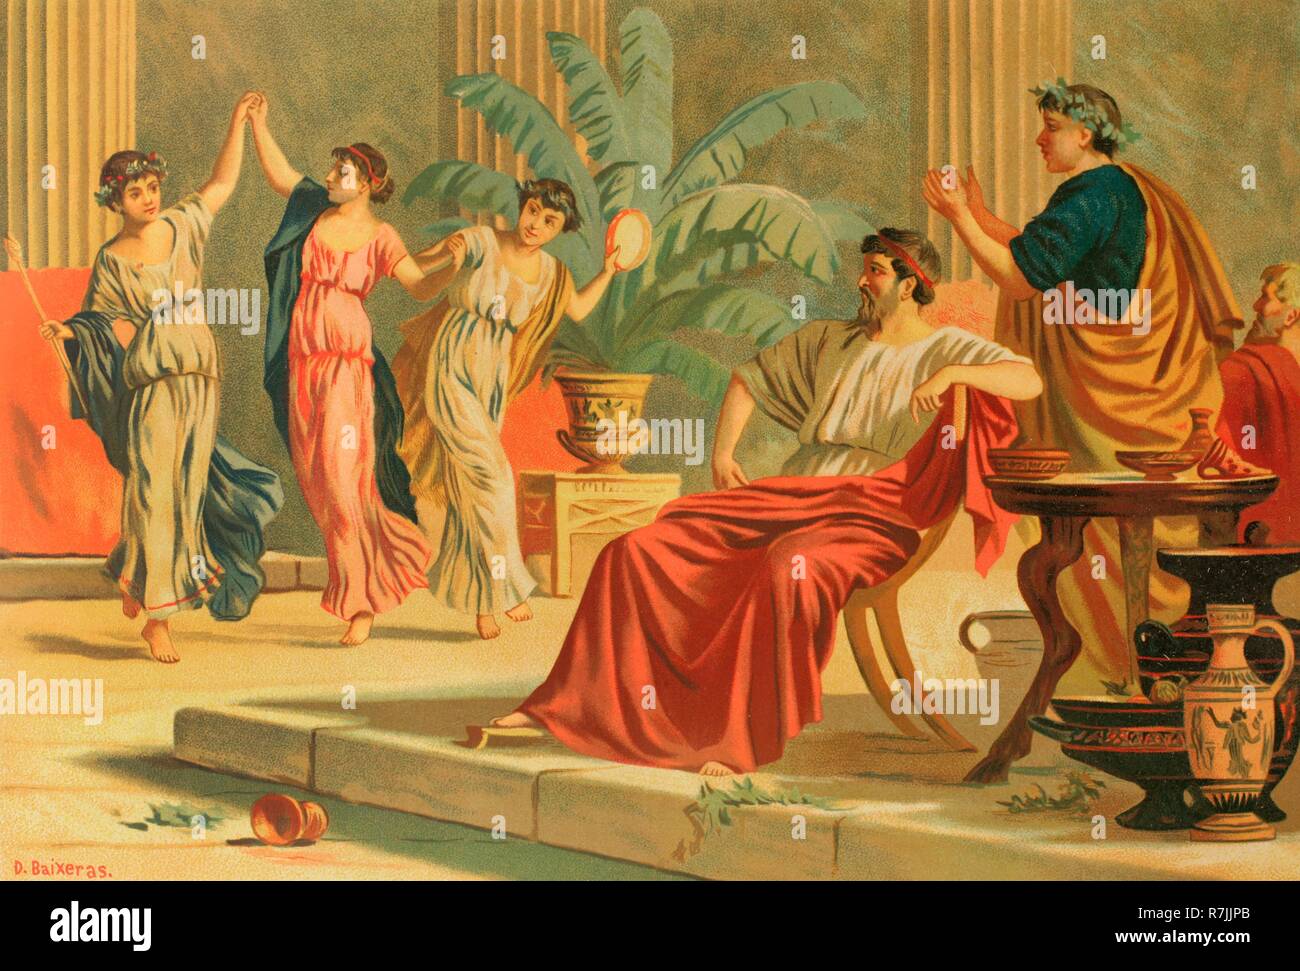 Ancient Greece. Dances after a banquet or simposium. Drawing by Dionisio Baixeras (1862-1943). Chromolithography. La Civilizacion (The Civilization), volume II, 1881. Stock Photo